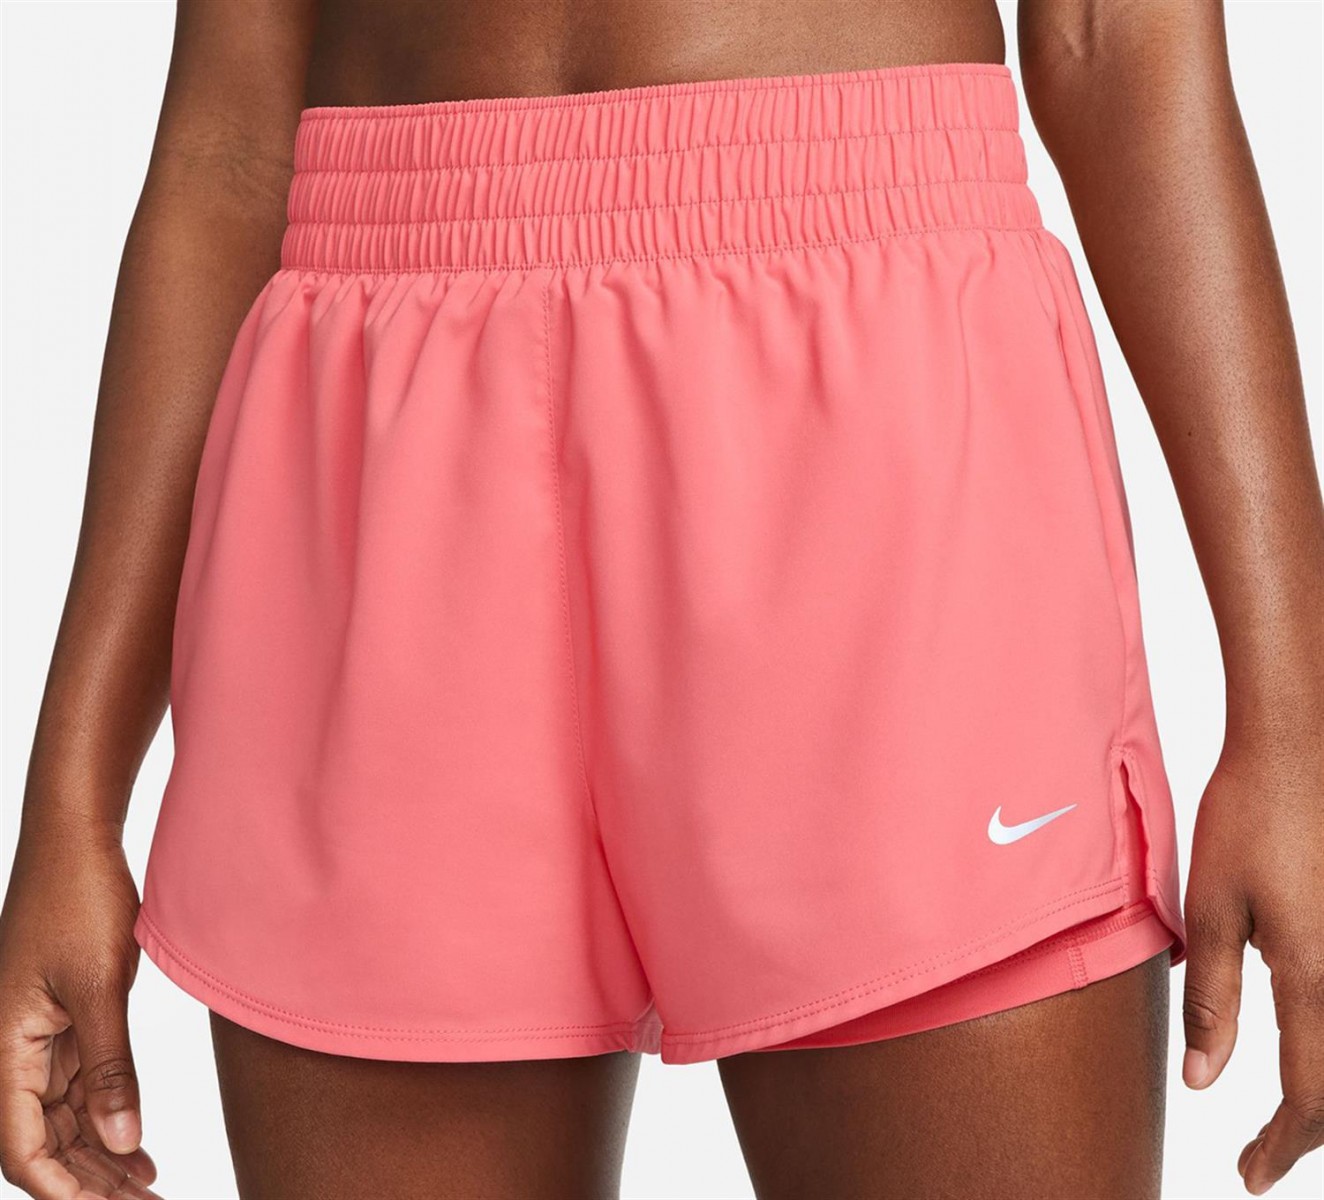 Теннисные шорты женские Nike One Shorts sea coral/silver